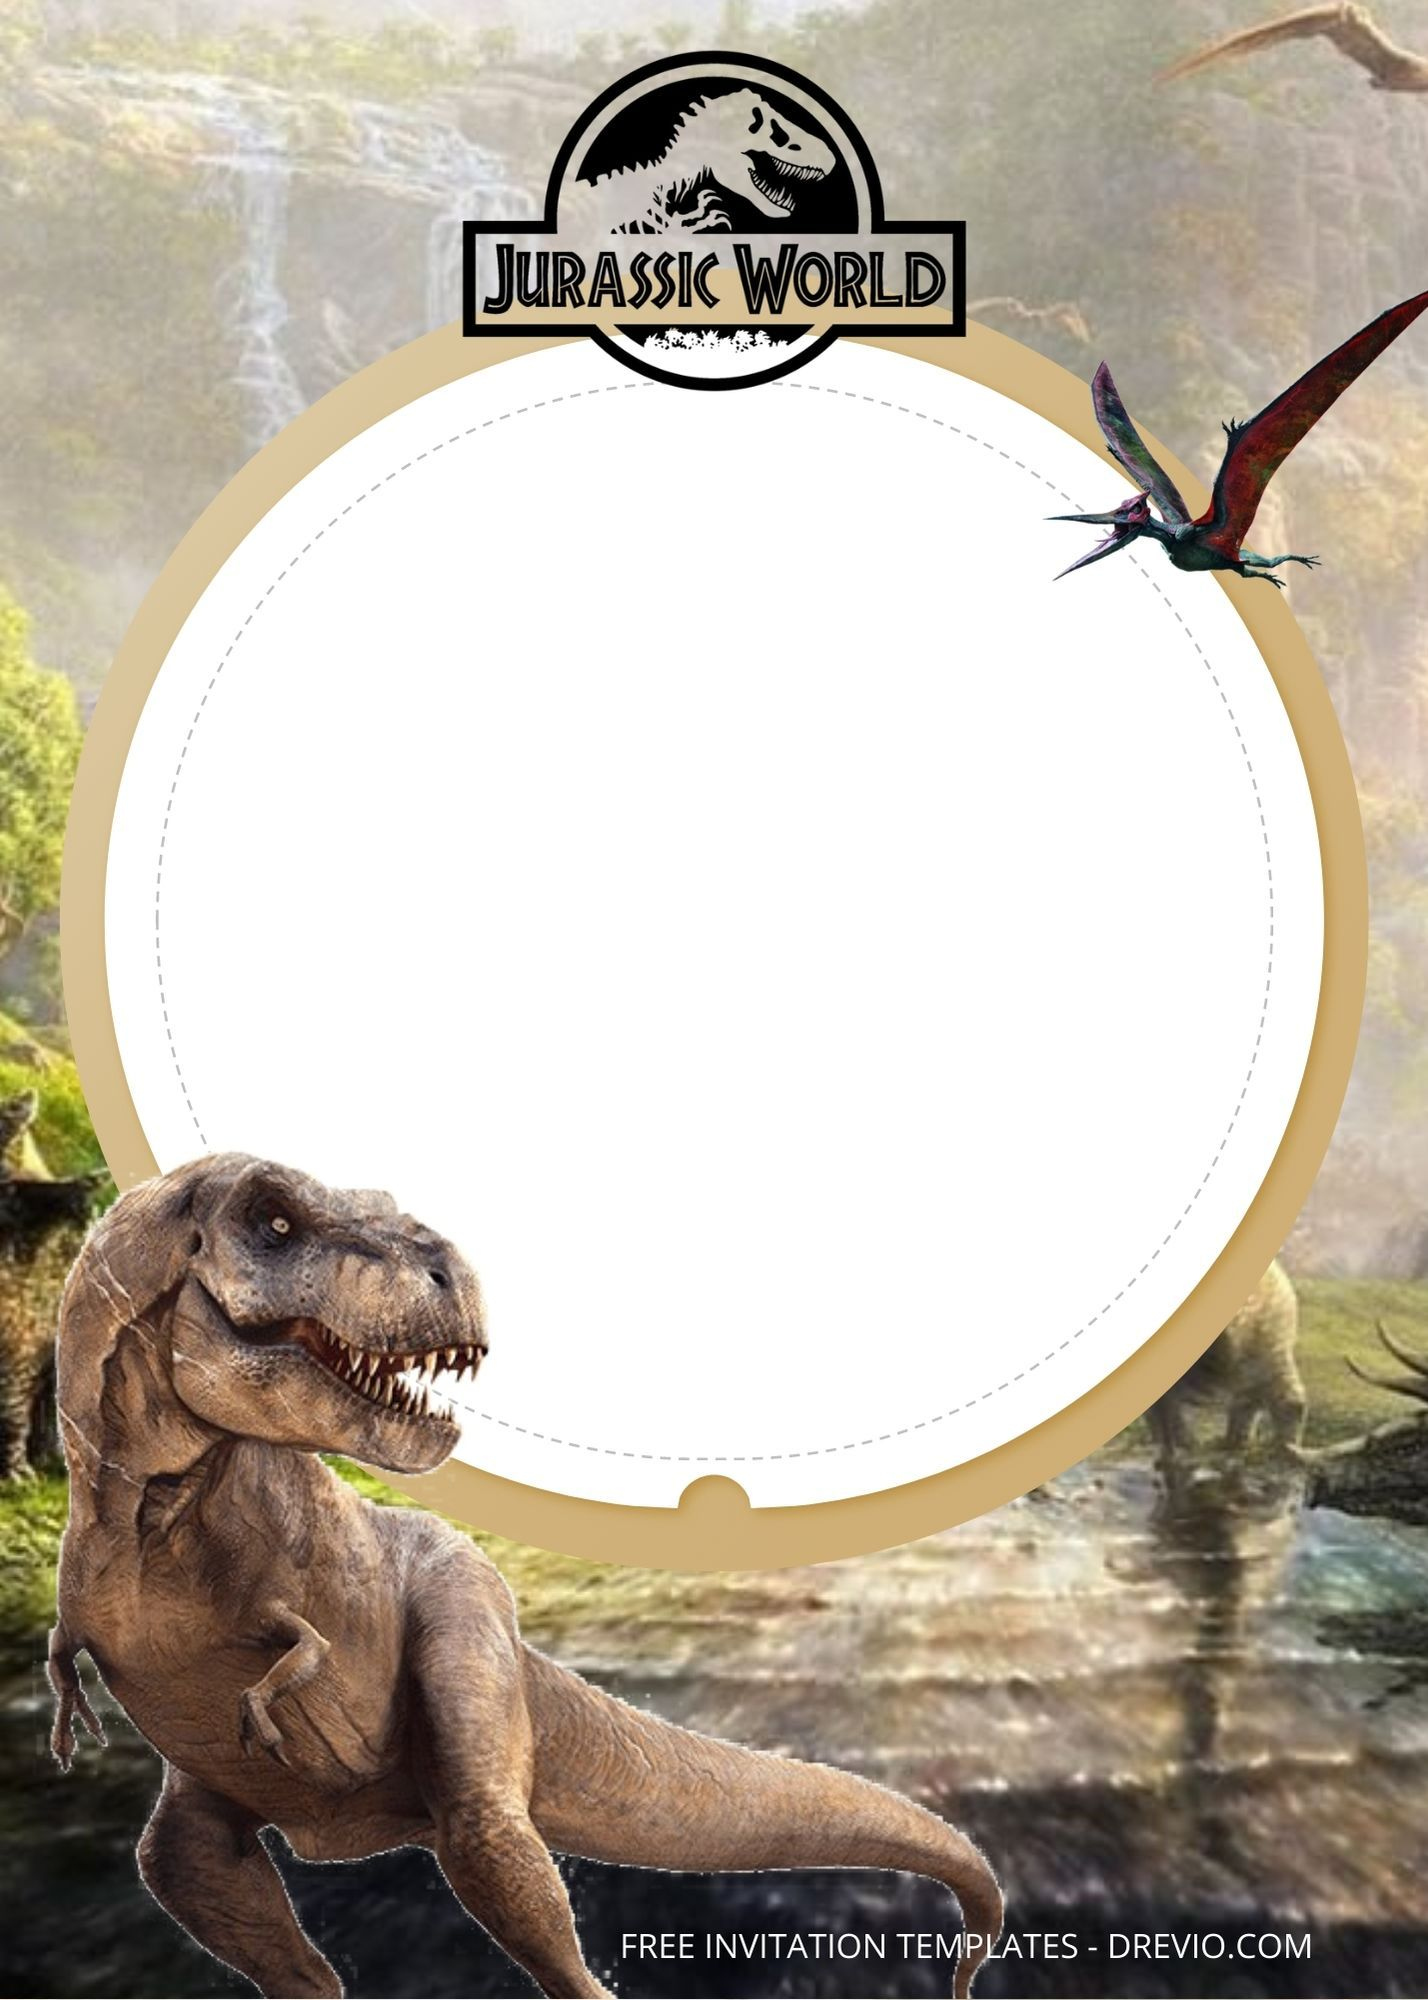 8+ Jurassic World Birthday Invitation Templates | Dinosaur in Free Printable Jurassic Park Invitations